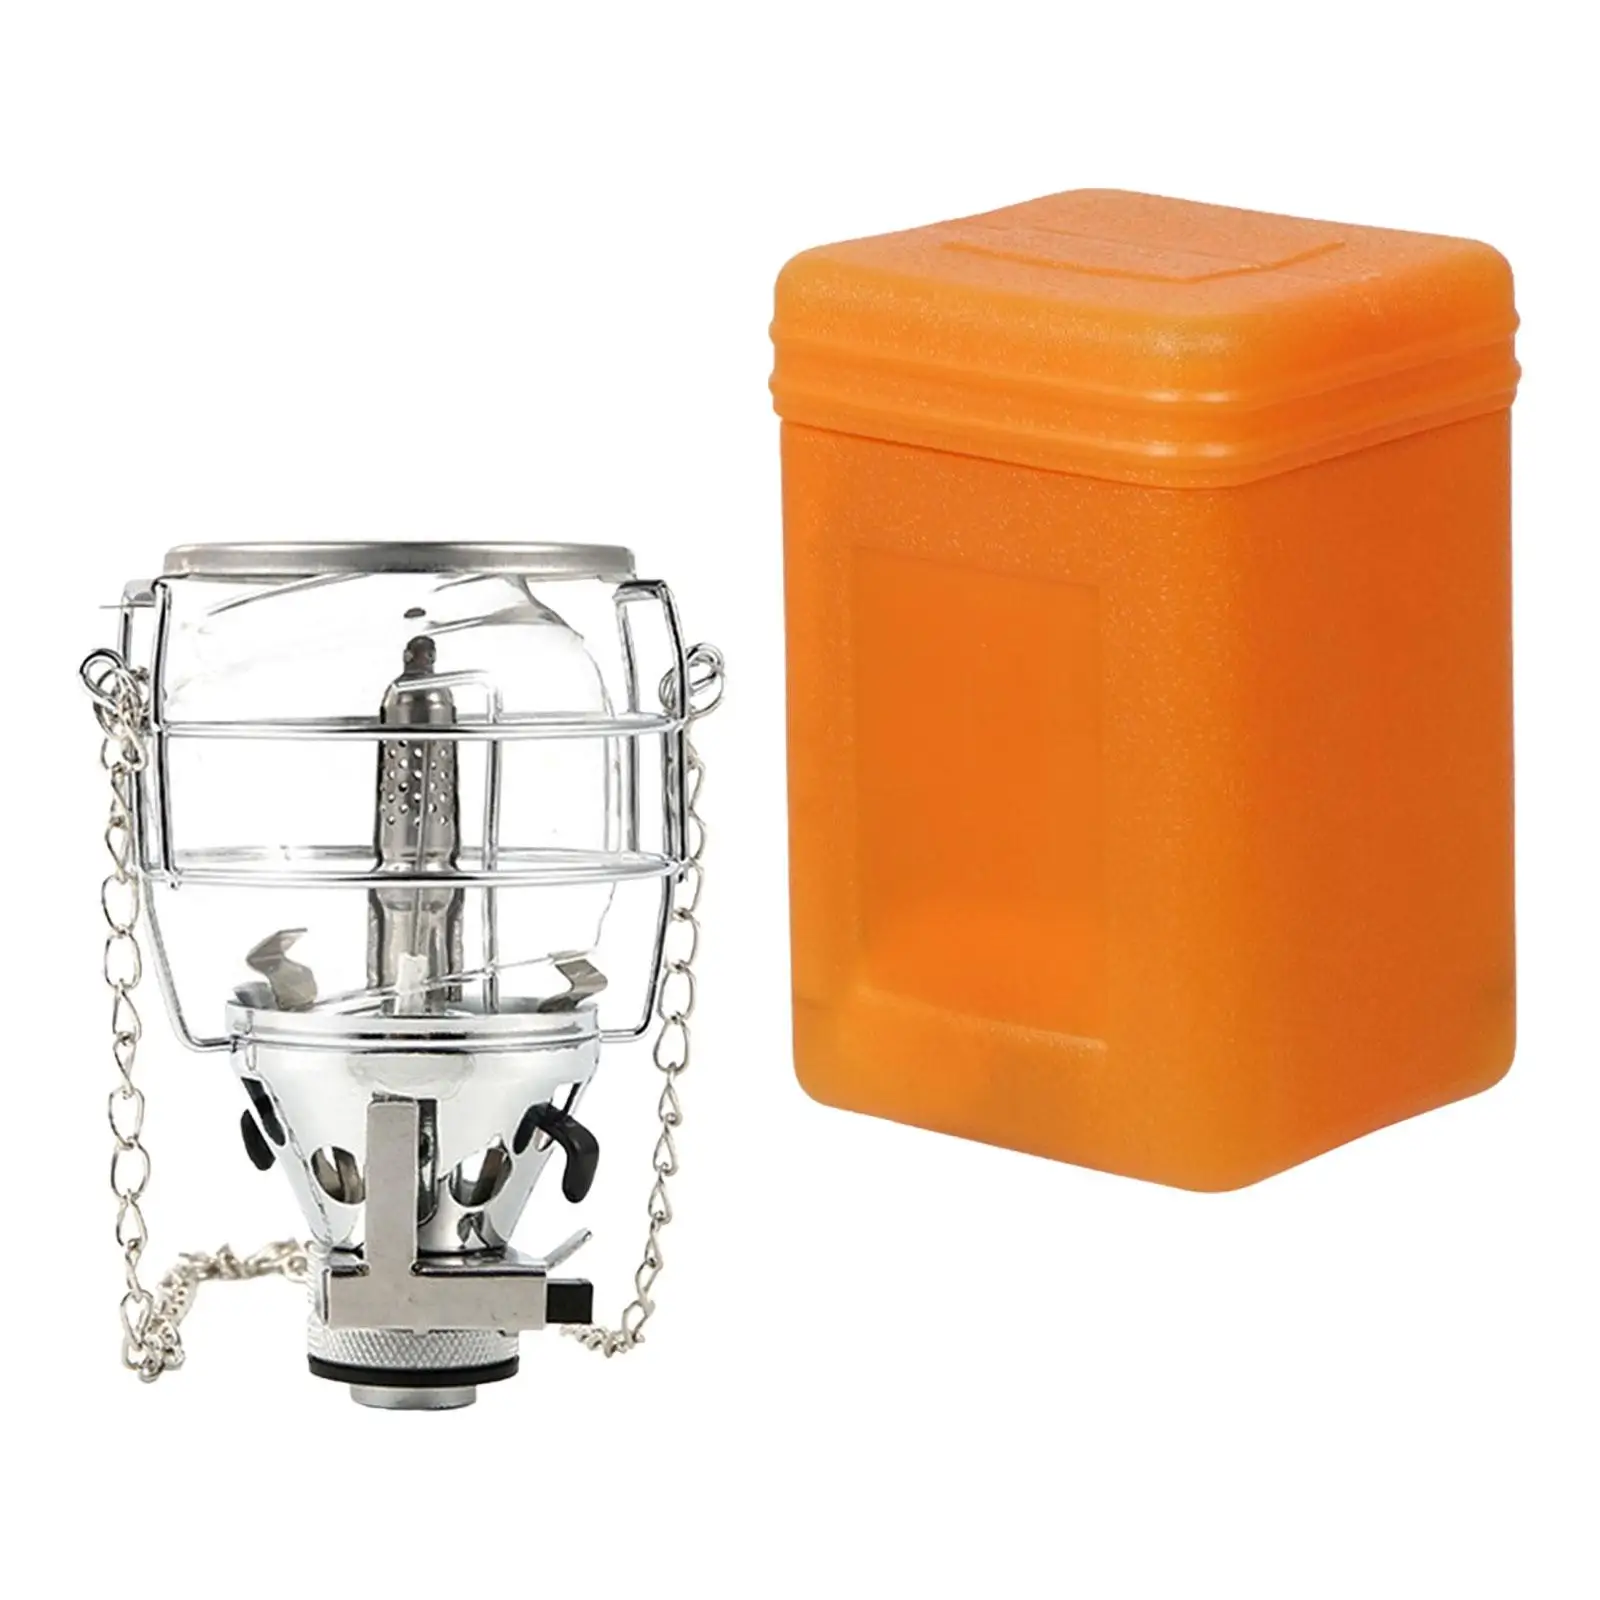 Gas Lantern Fuel Lamp Adjustable Hanging Torch Camping Light Outdoor Light for Trekking Emergency Fishing Backpacking Travel